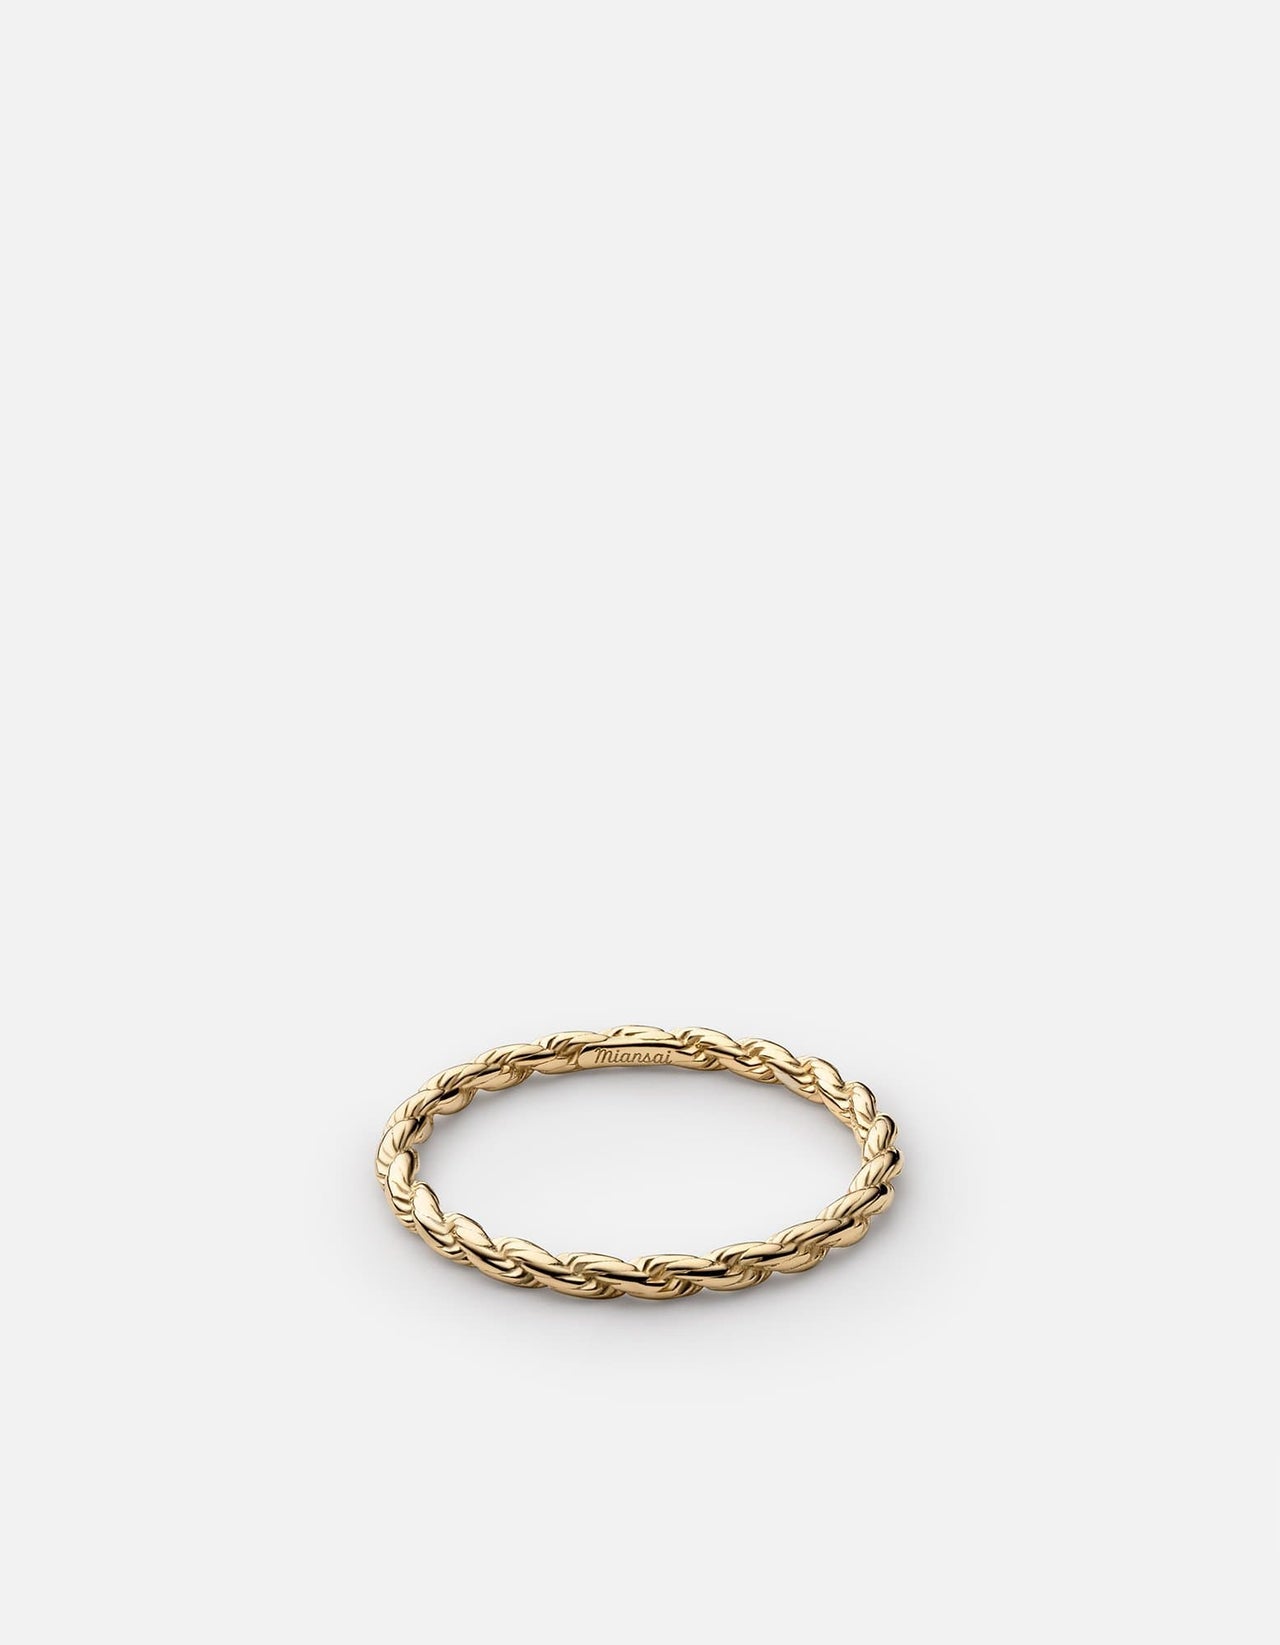 Miansai Women's Thin Rope Chain Ring, Gold Vermeil, Size 7